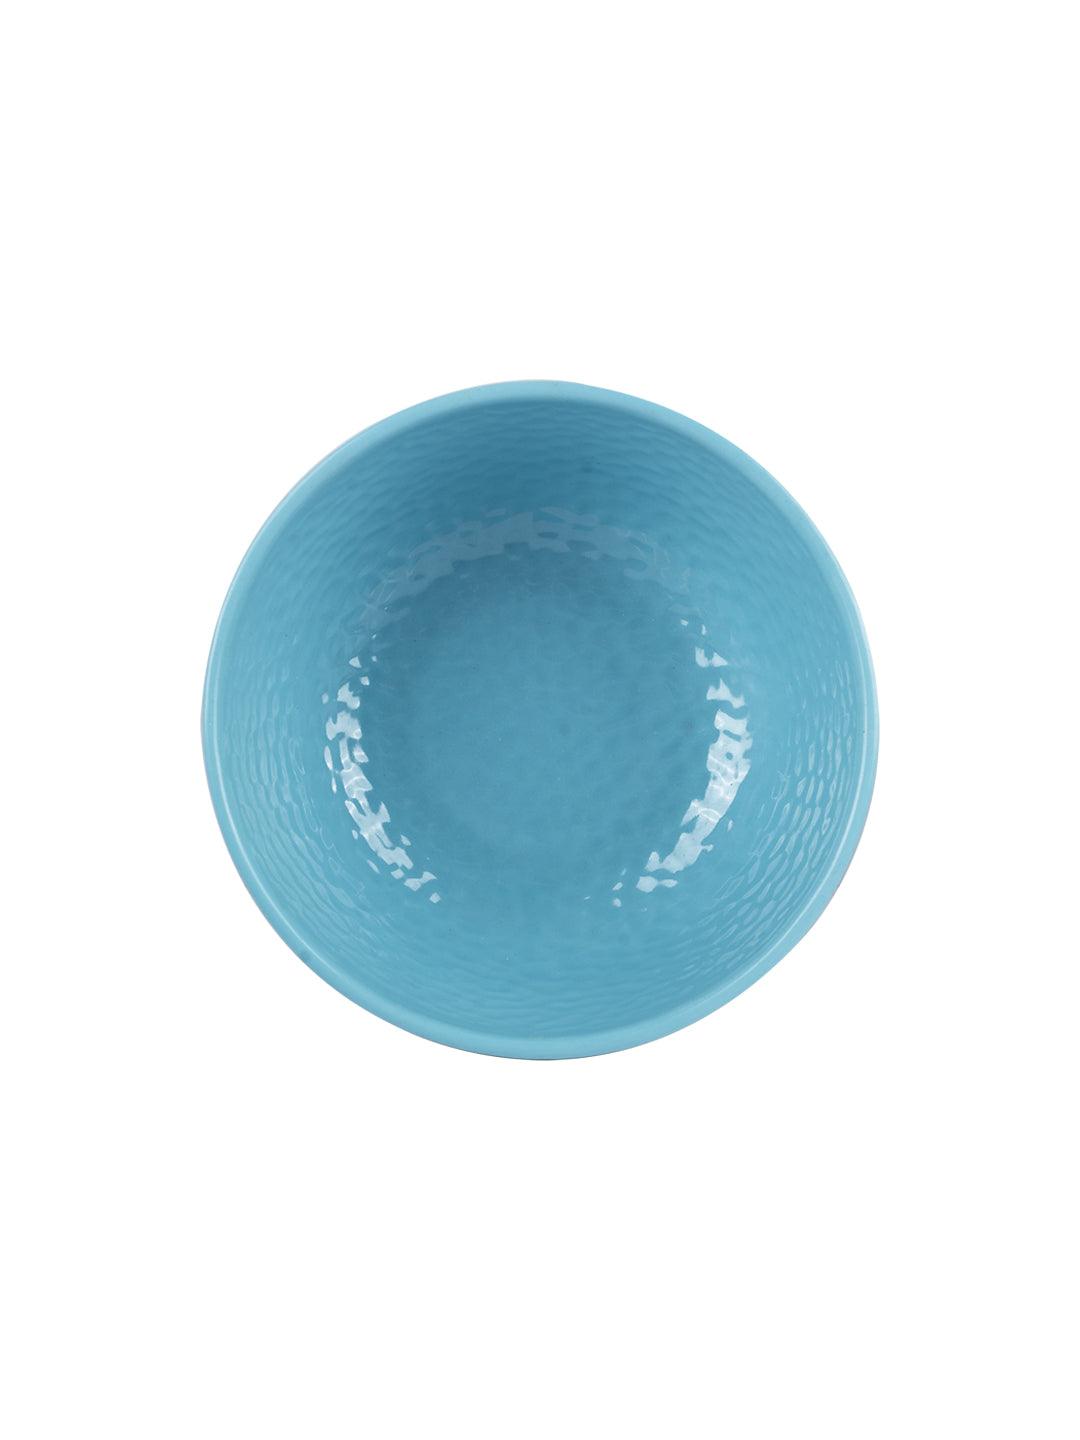 VON CASA Melamine Round Soup Bowl - Set of 6, Turquoise